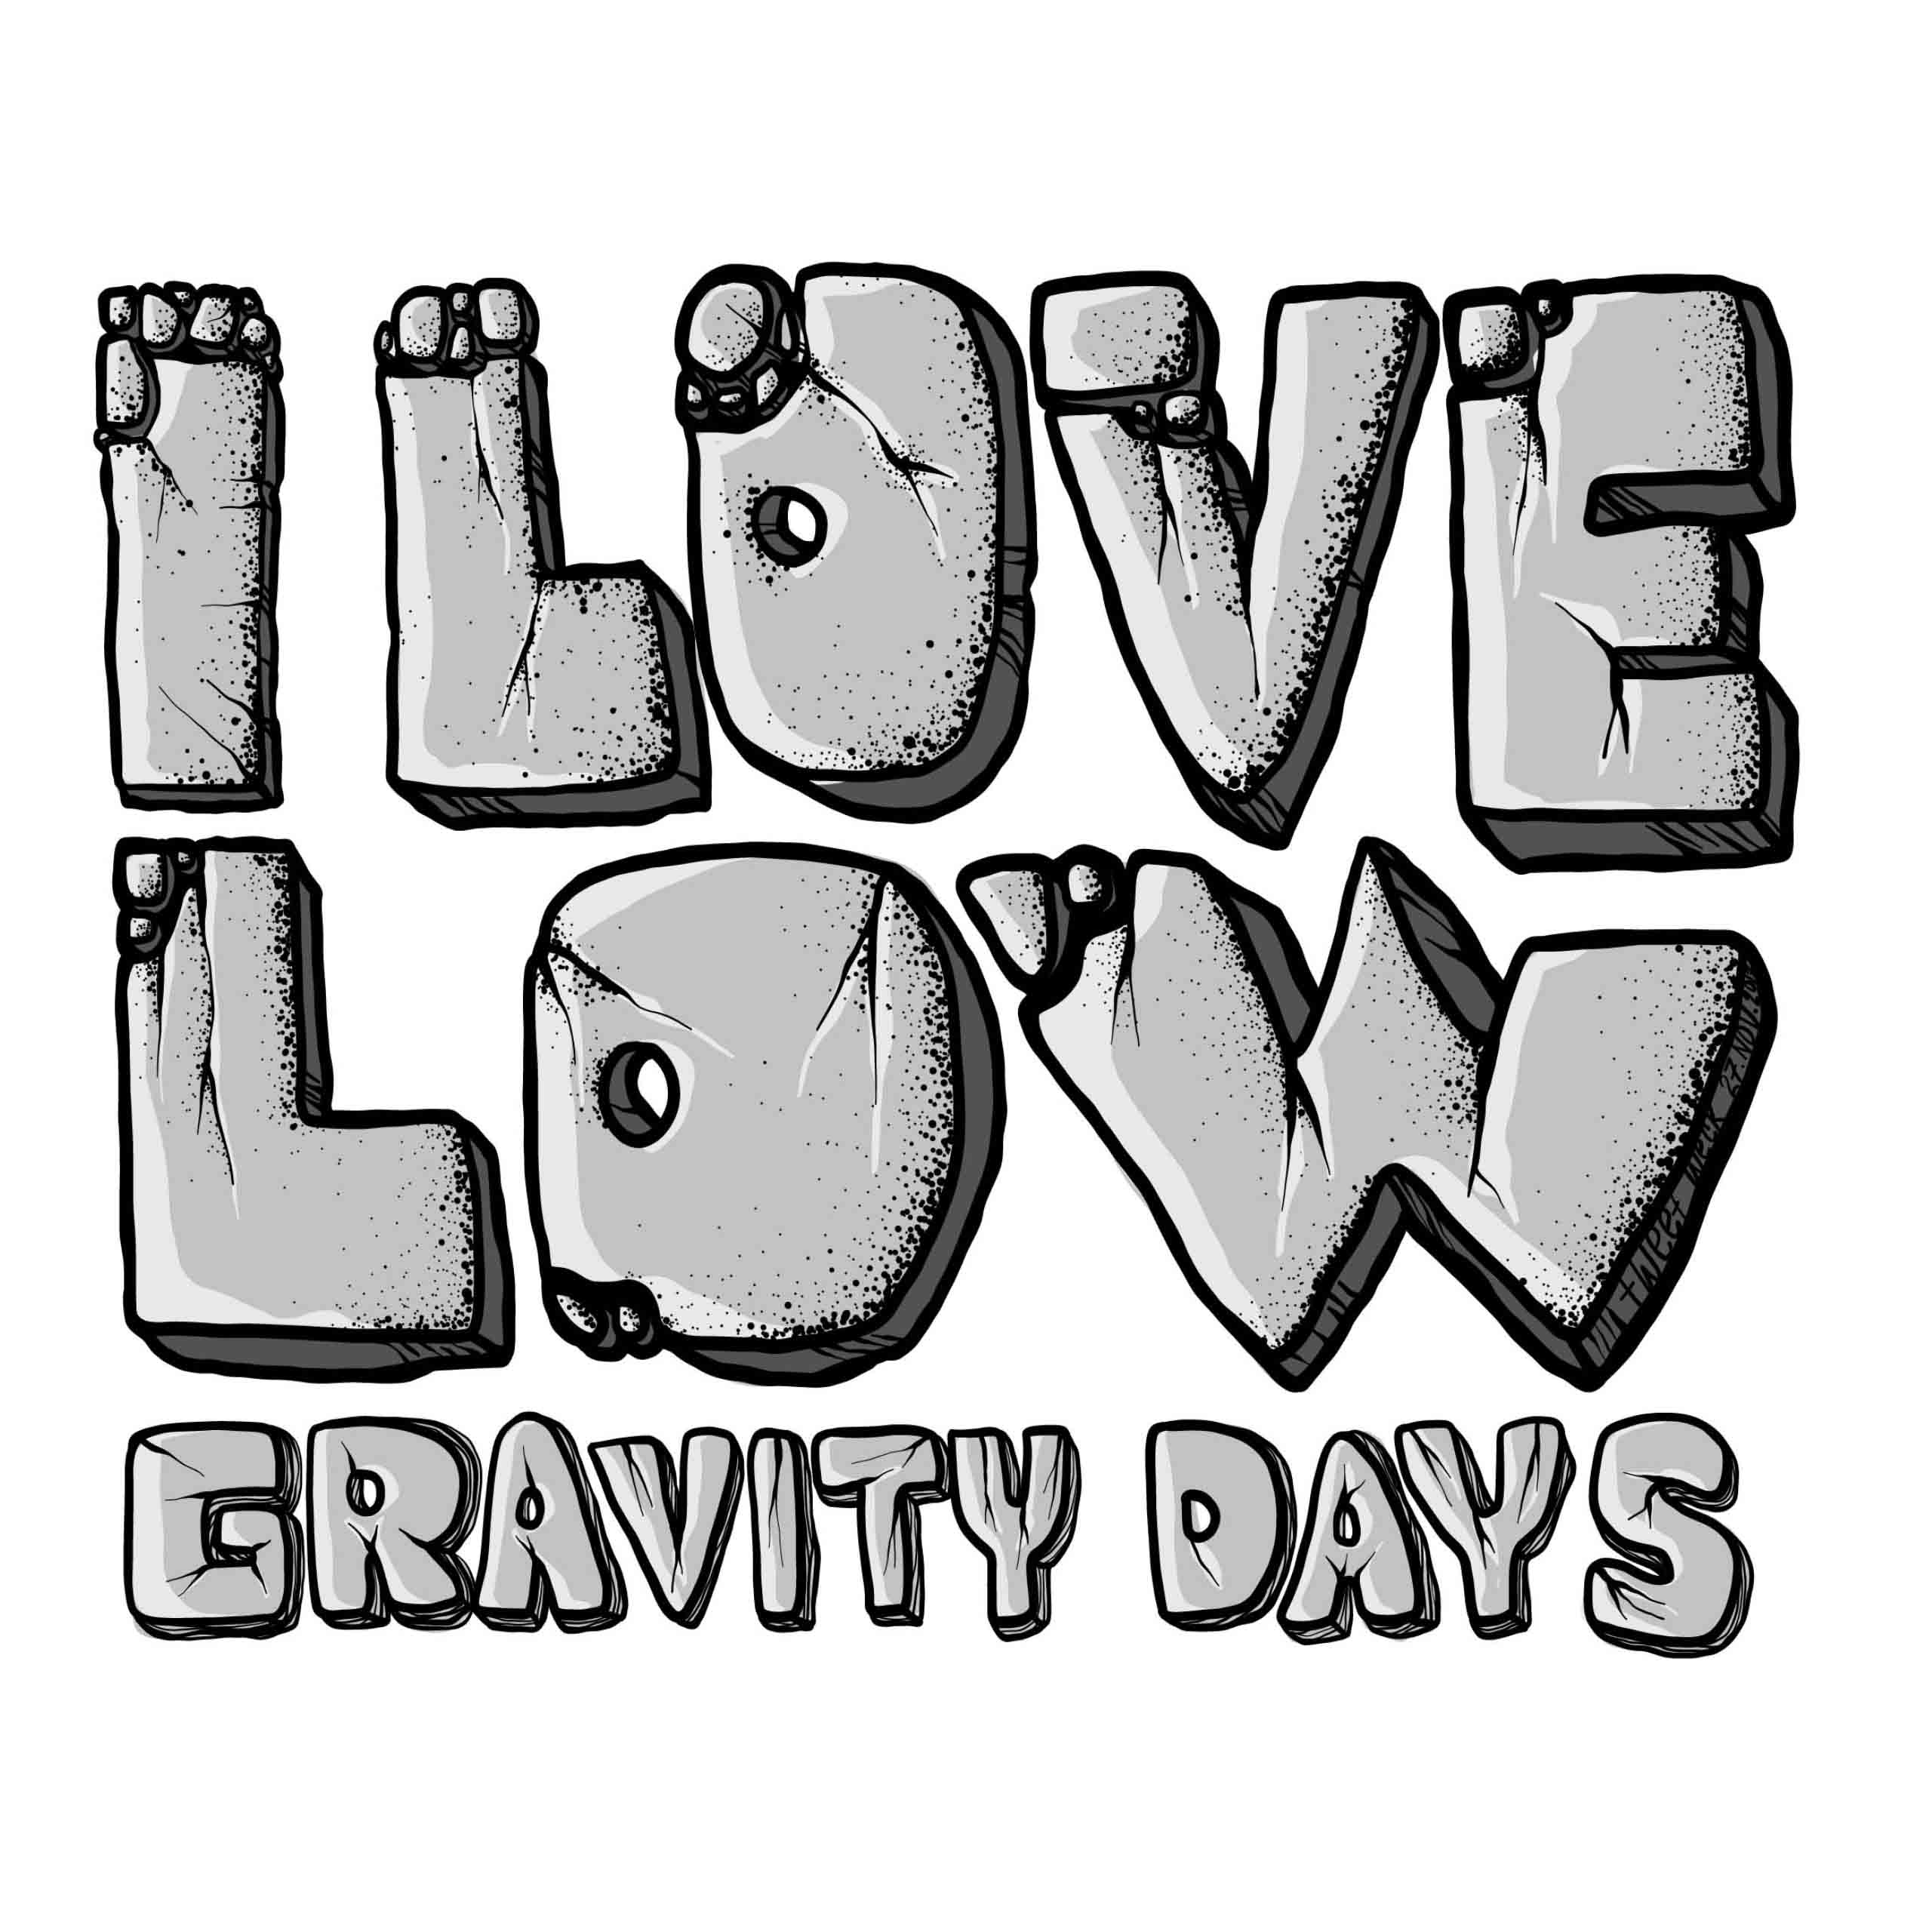 I Love Low Gravity Days - rock climbing-shirt